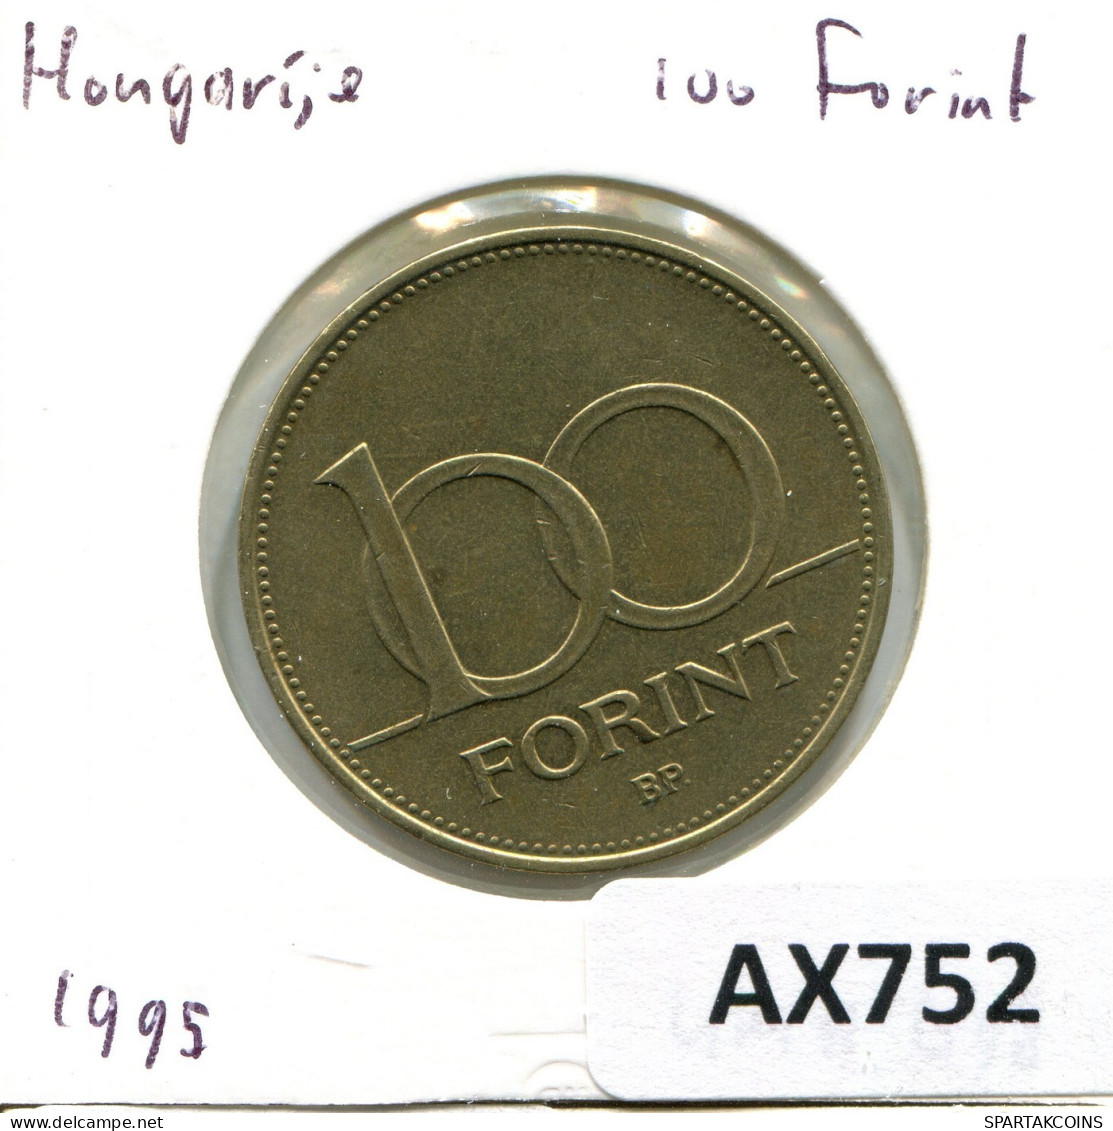 100 FORINT 1995 HUNGARY Coin #AX752.U.A - Hungary